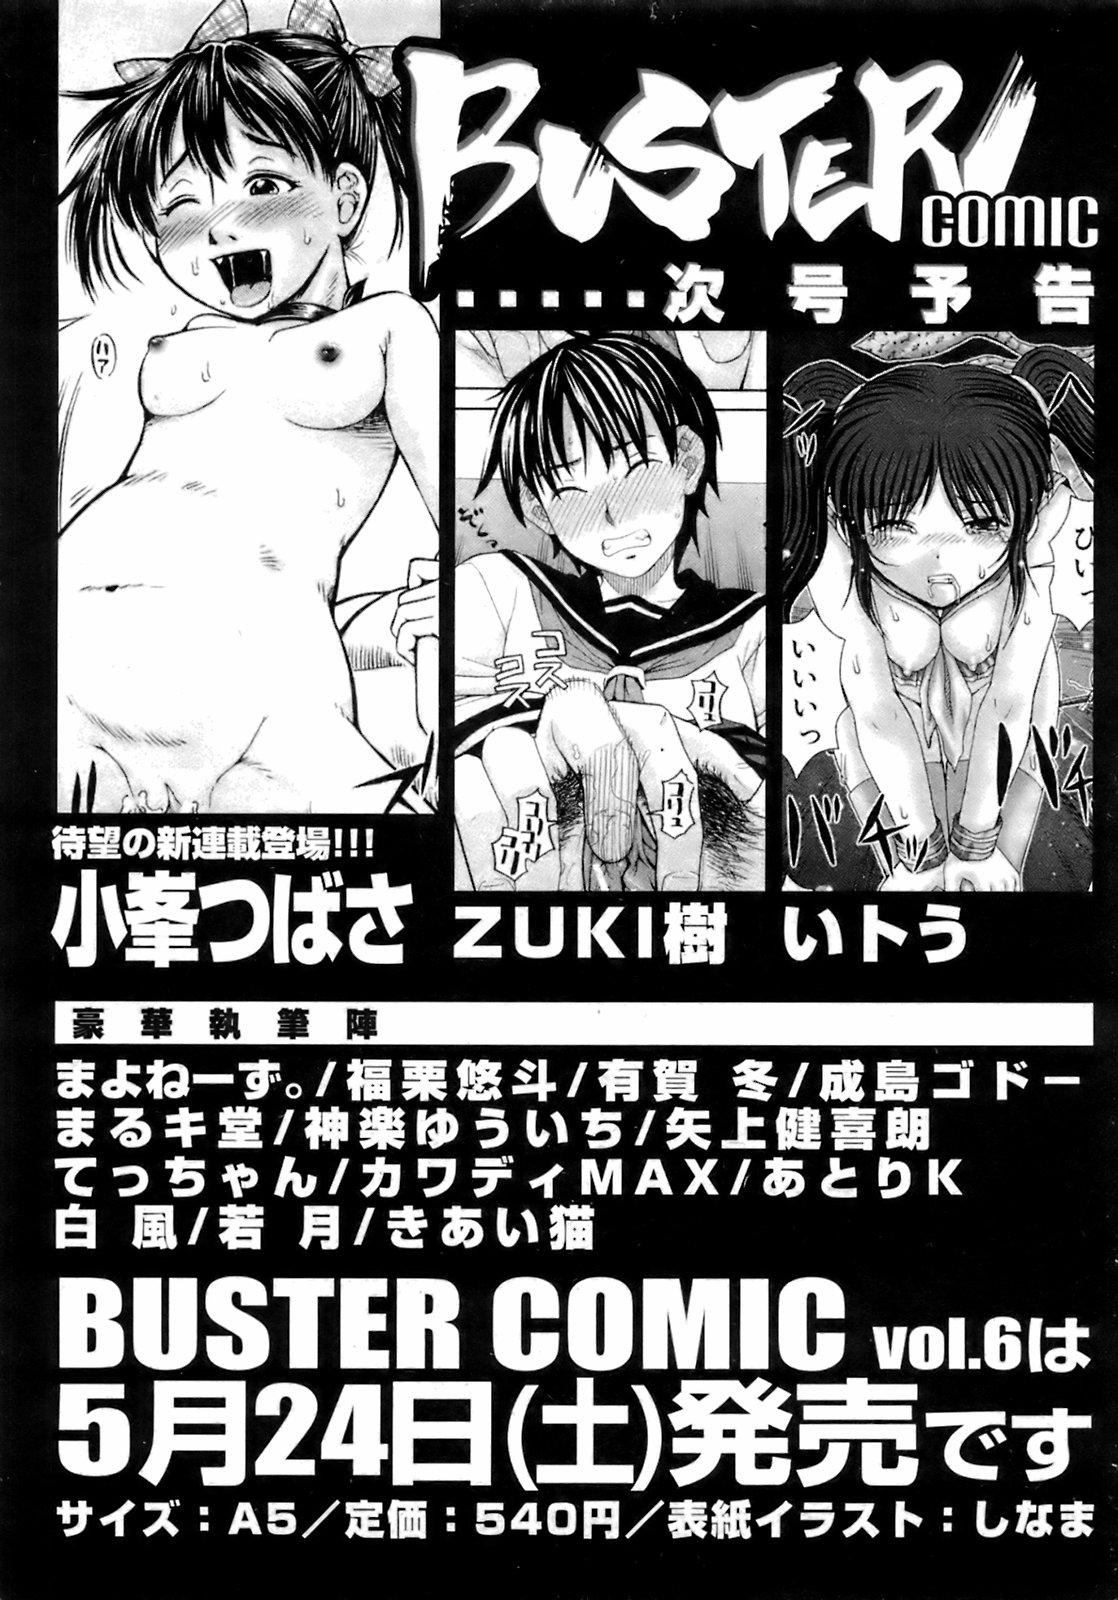 Buster Comic Vol. 5 429